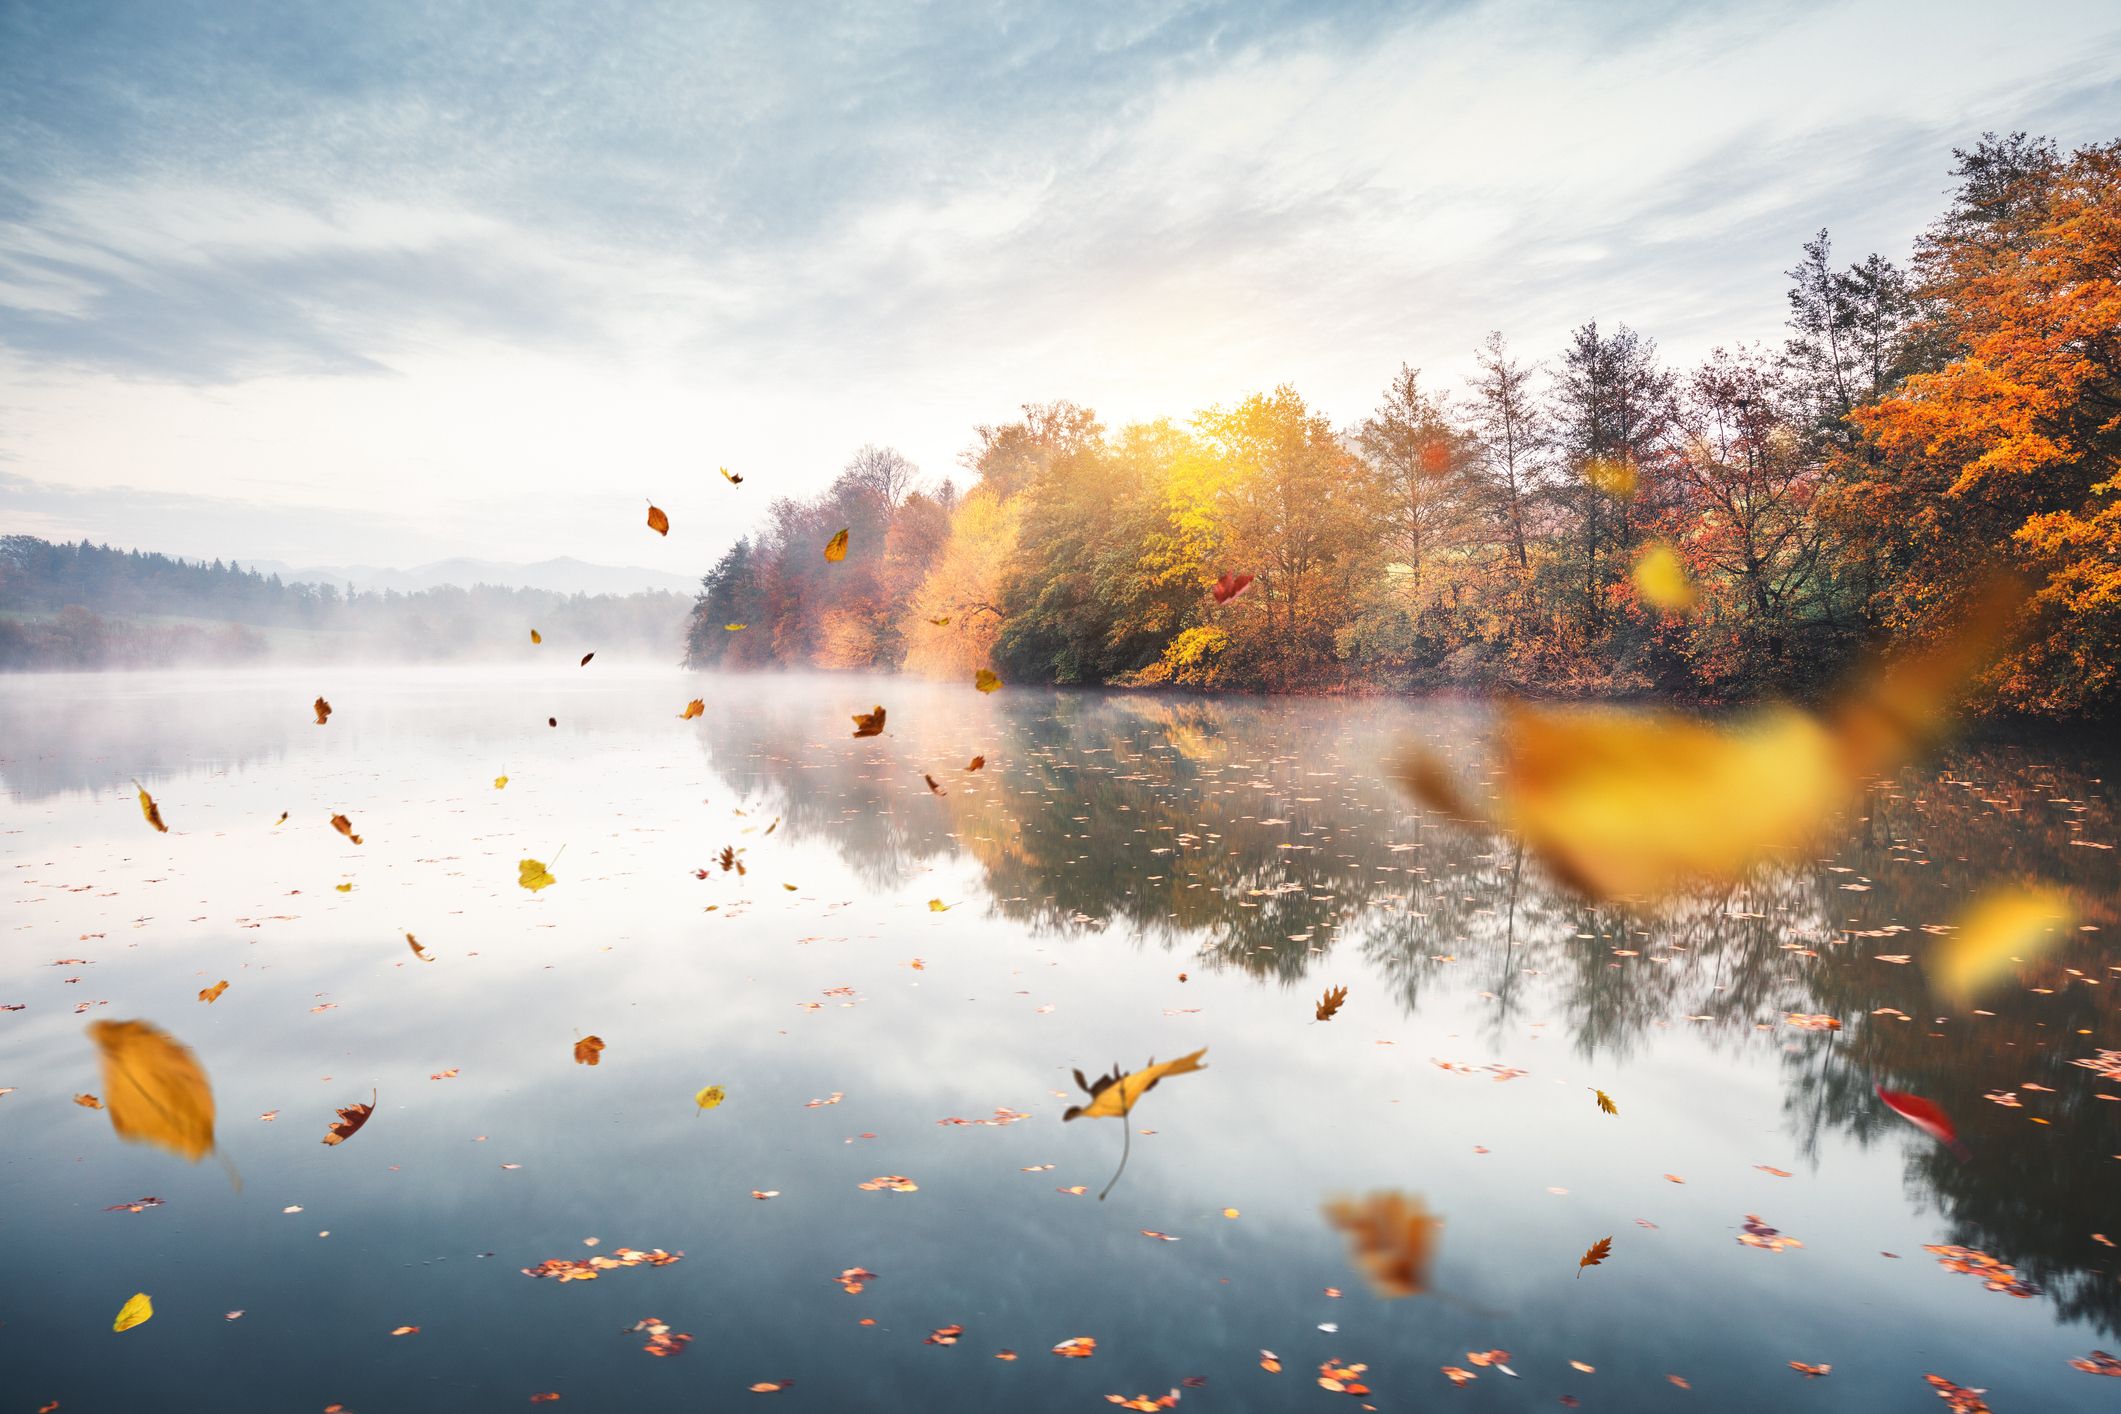 Beautiful Autumn Good Morning Images Wallpapers